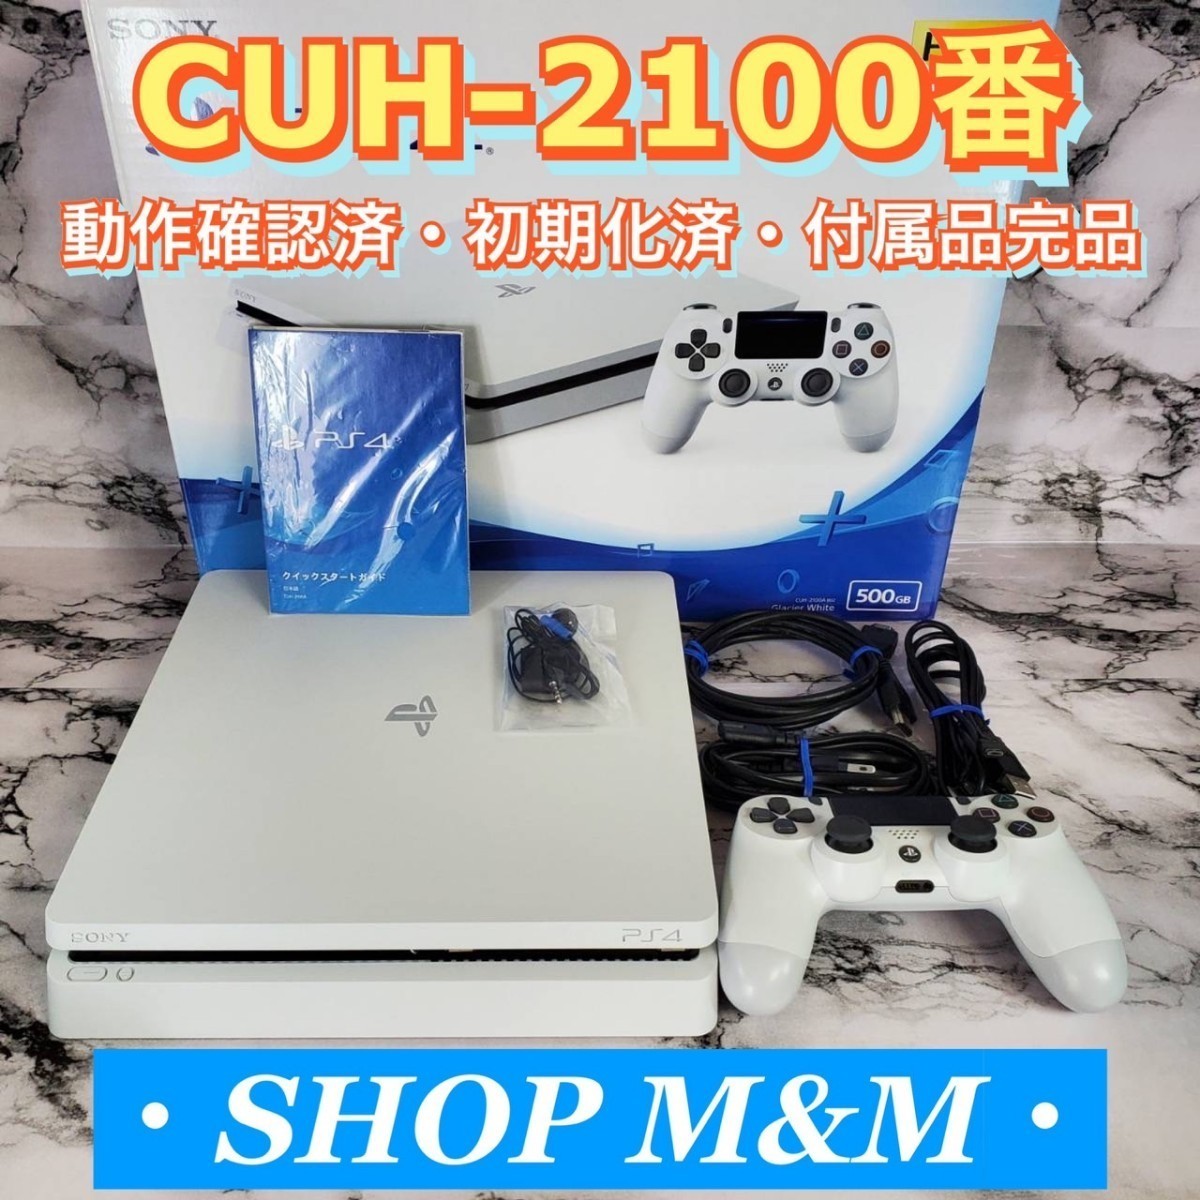 CUH-2100B コントローラー付きPlayStation4 ps4本体 - Nintendo Switch